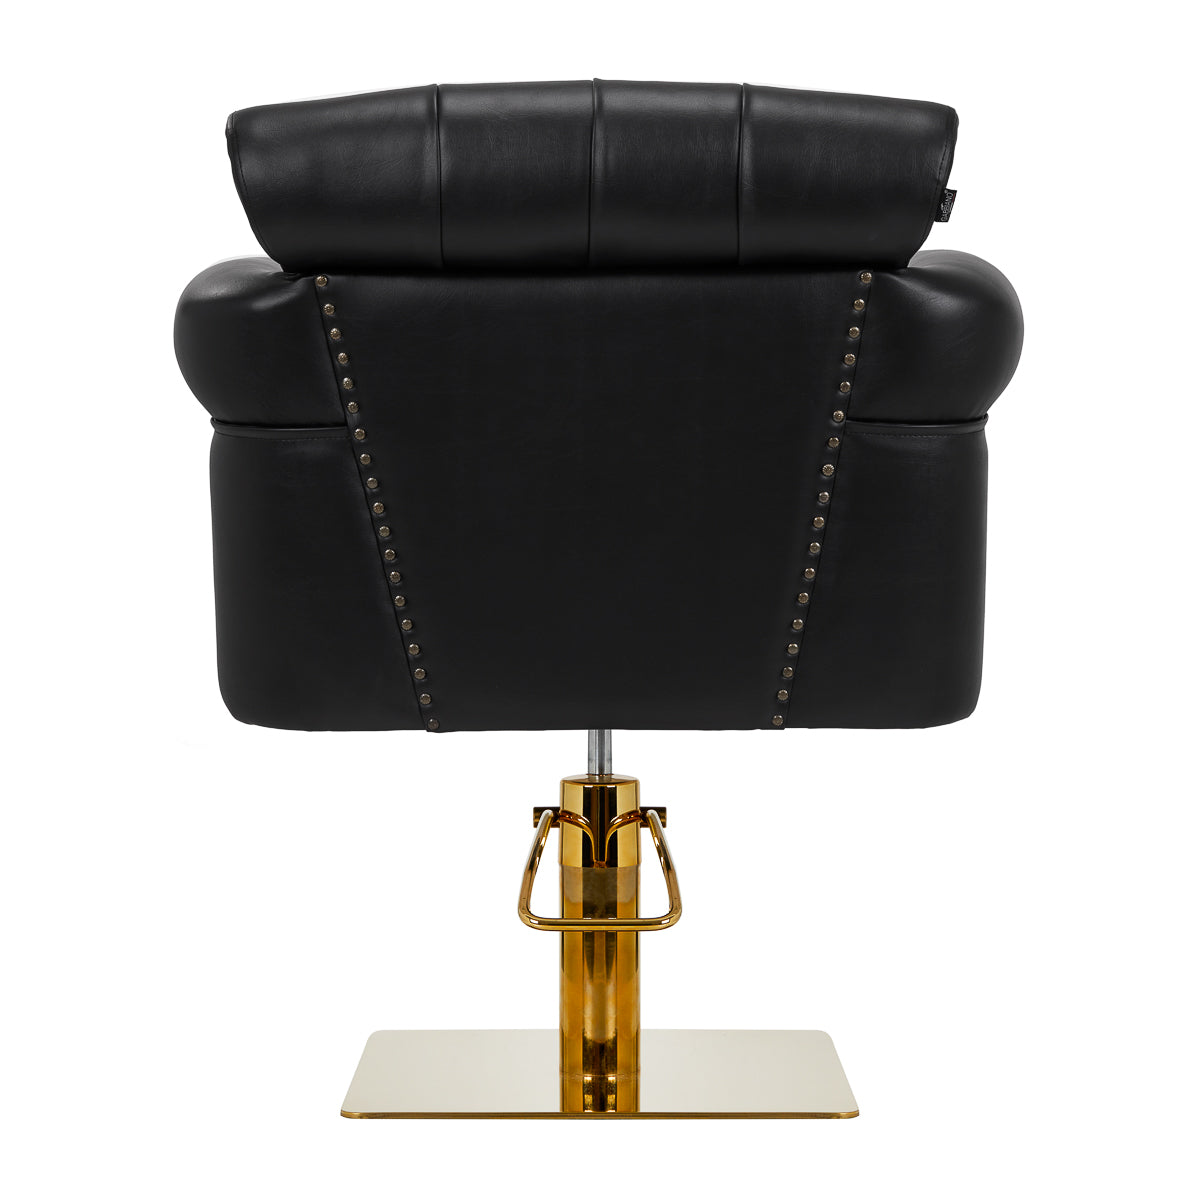 Gabbiano Berlin Hairdressing Chair Black & Gold